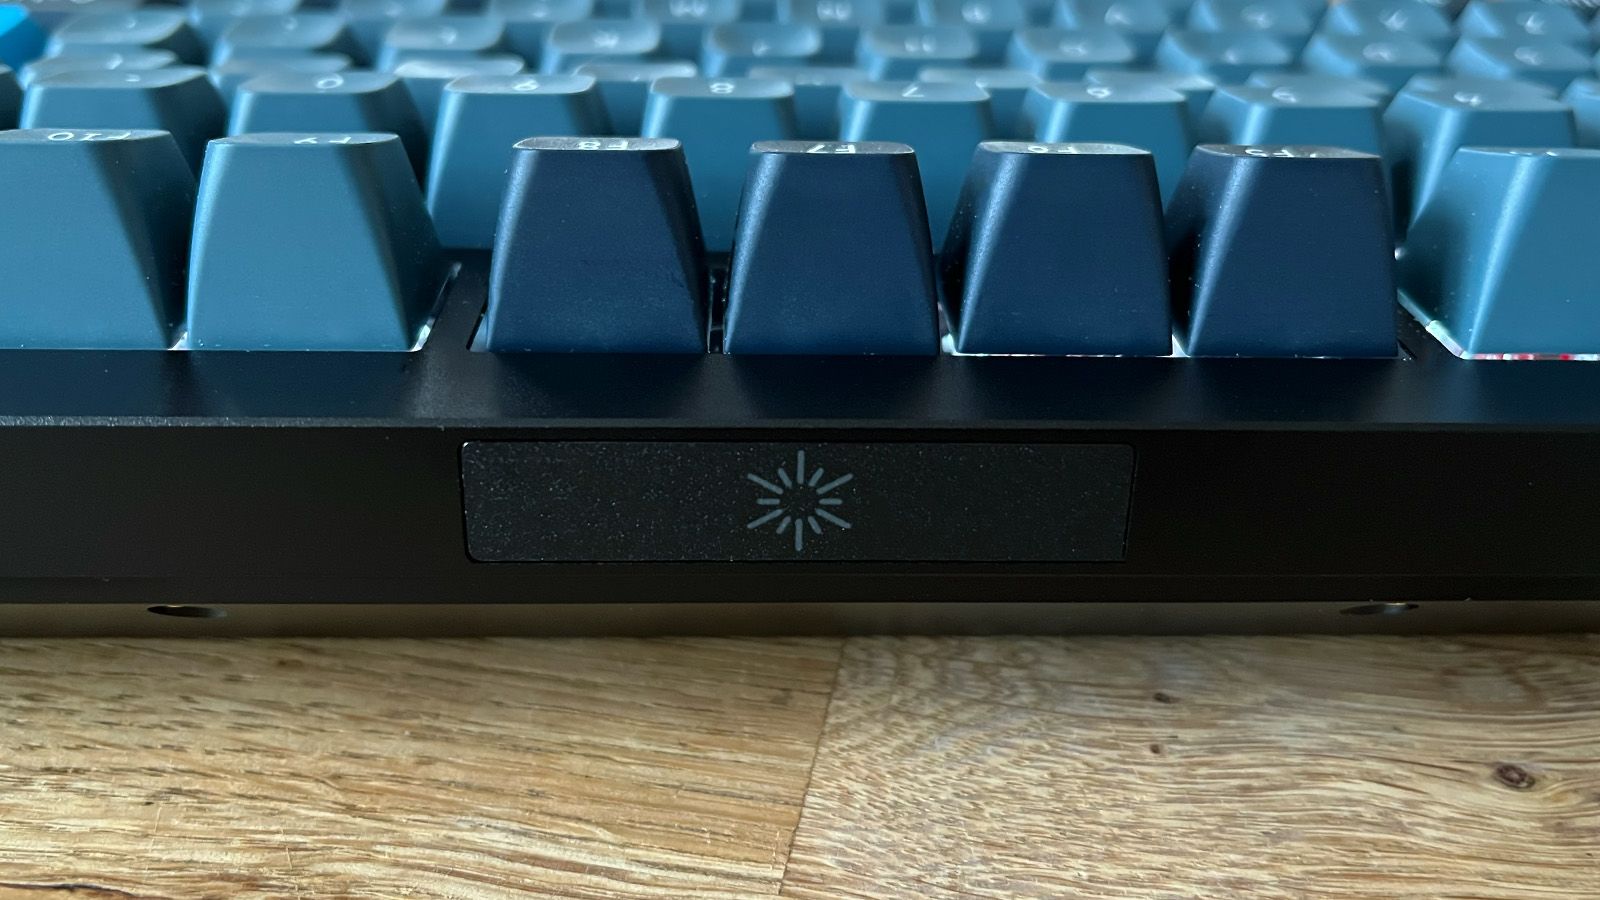 The best mechanical keyboards of 2023 CNN Underscored